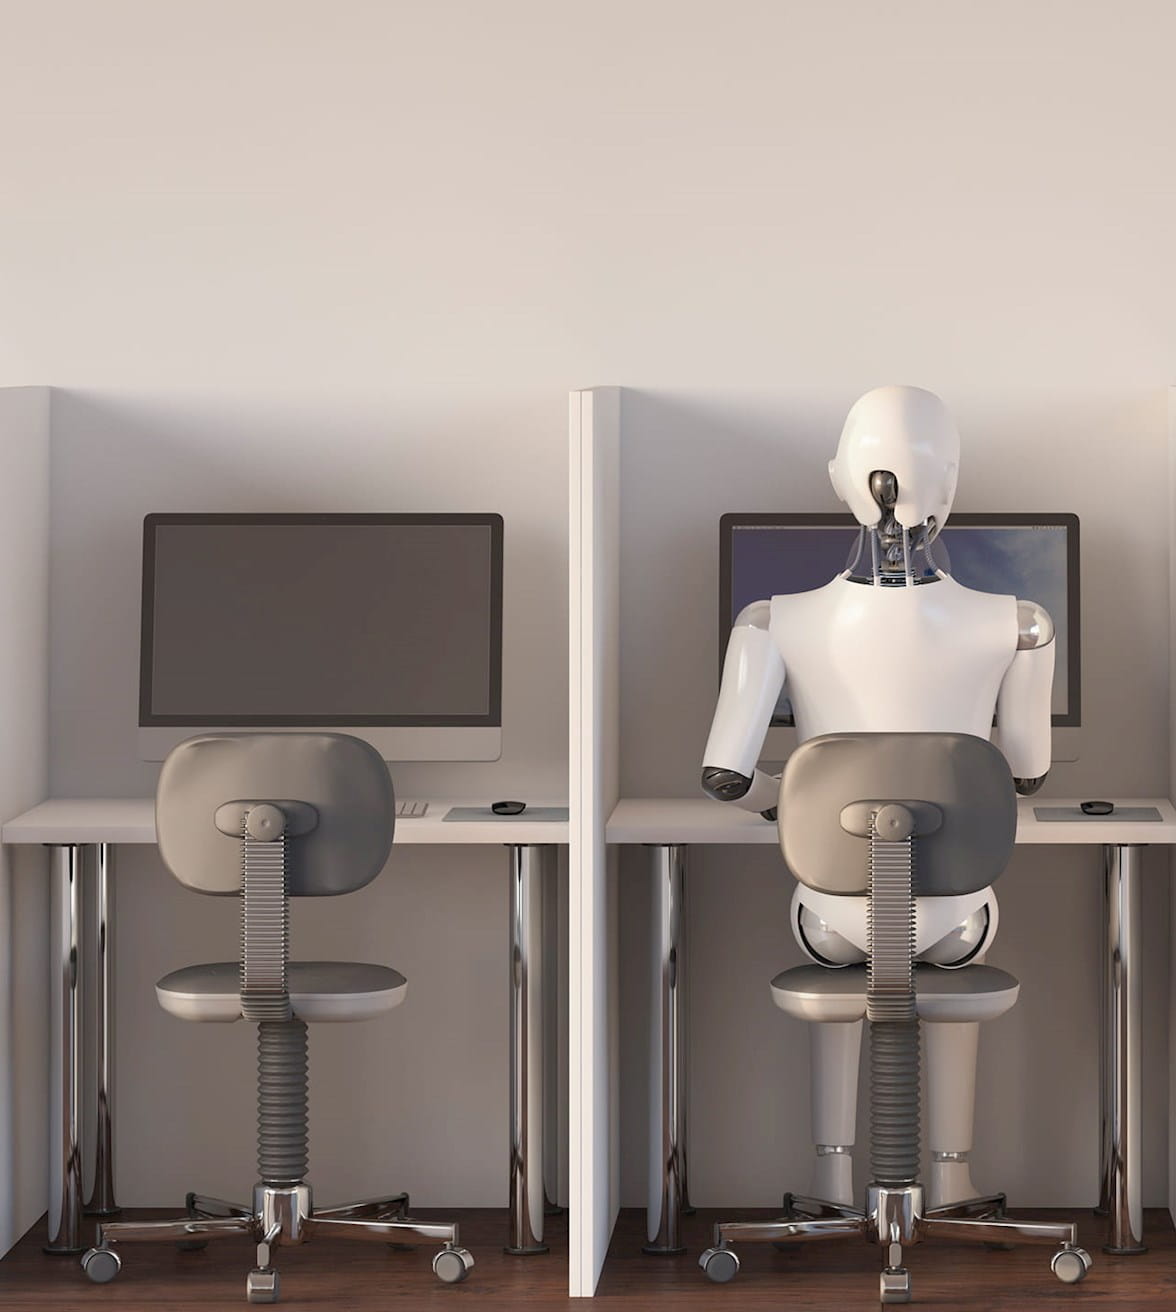 robot sitting at a computer station